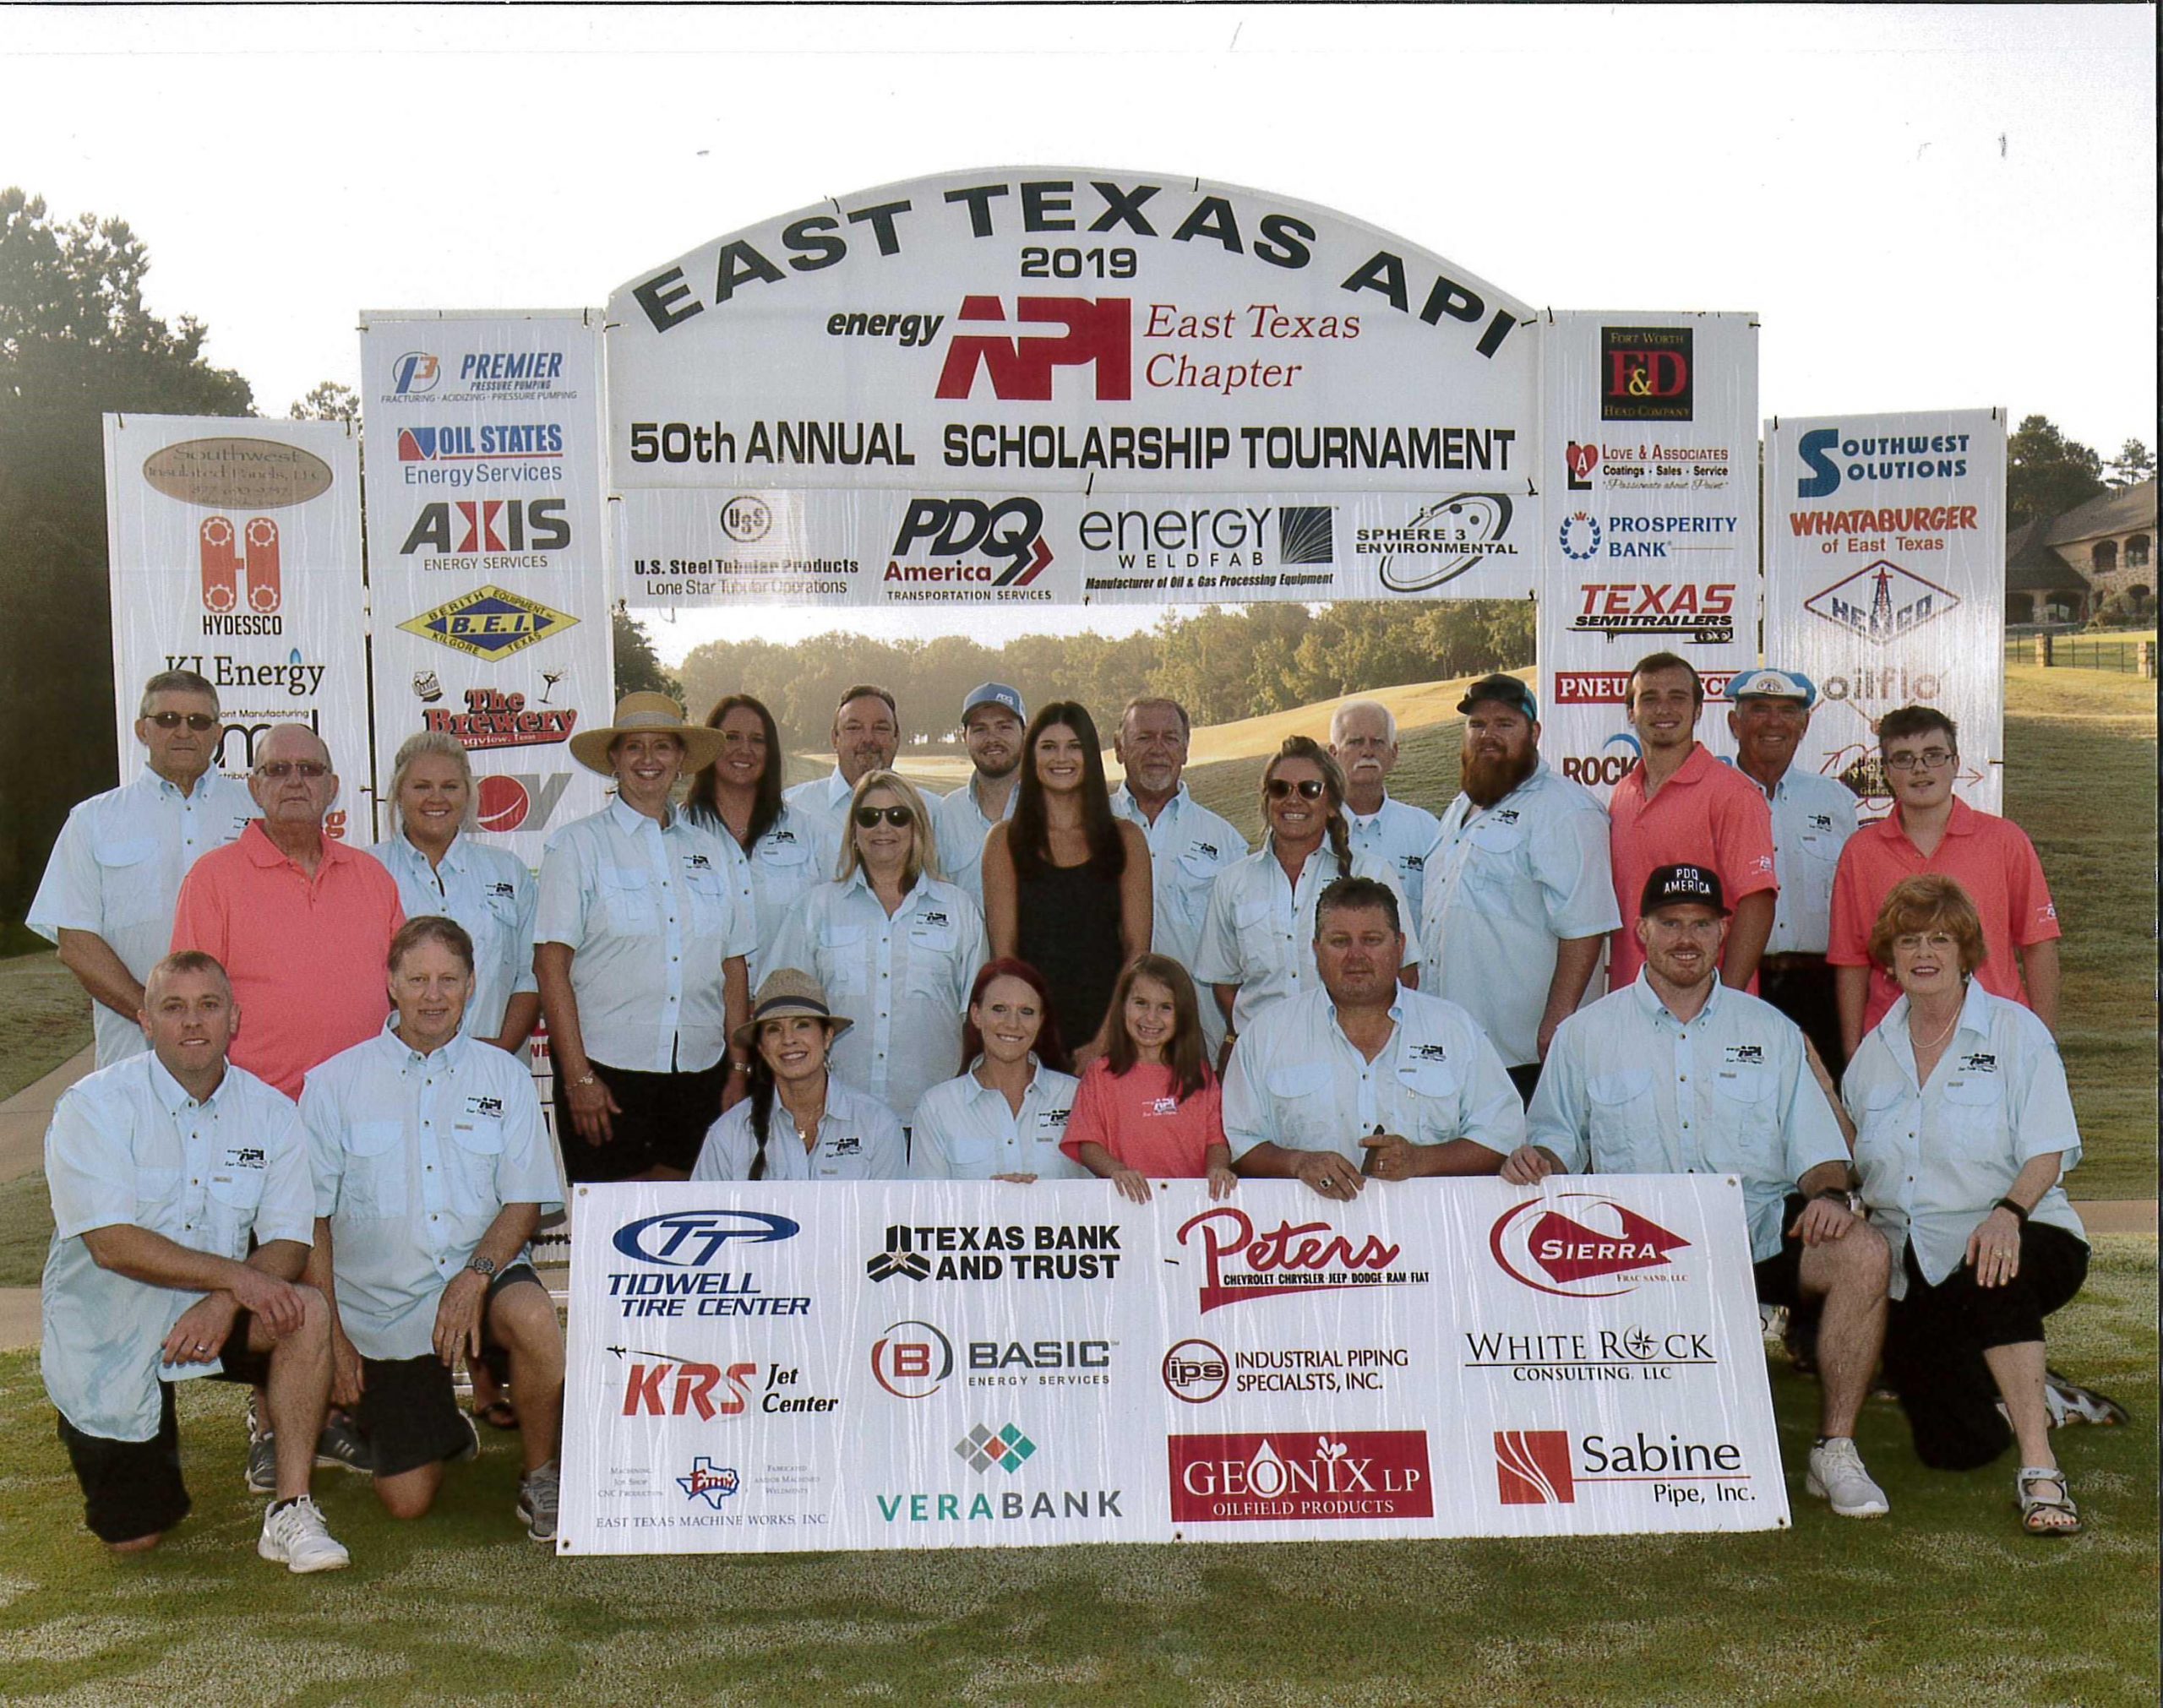 51st Annual East Texas API Golf Tournament at Tempest Golf Club